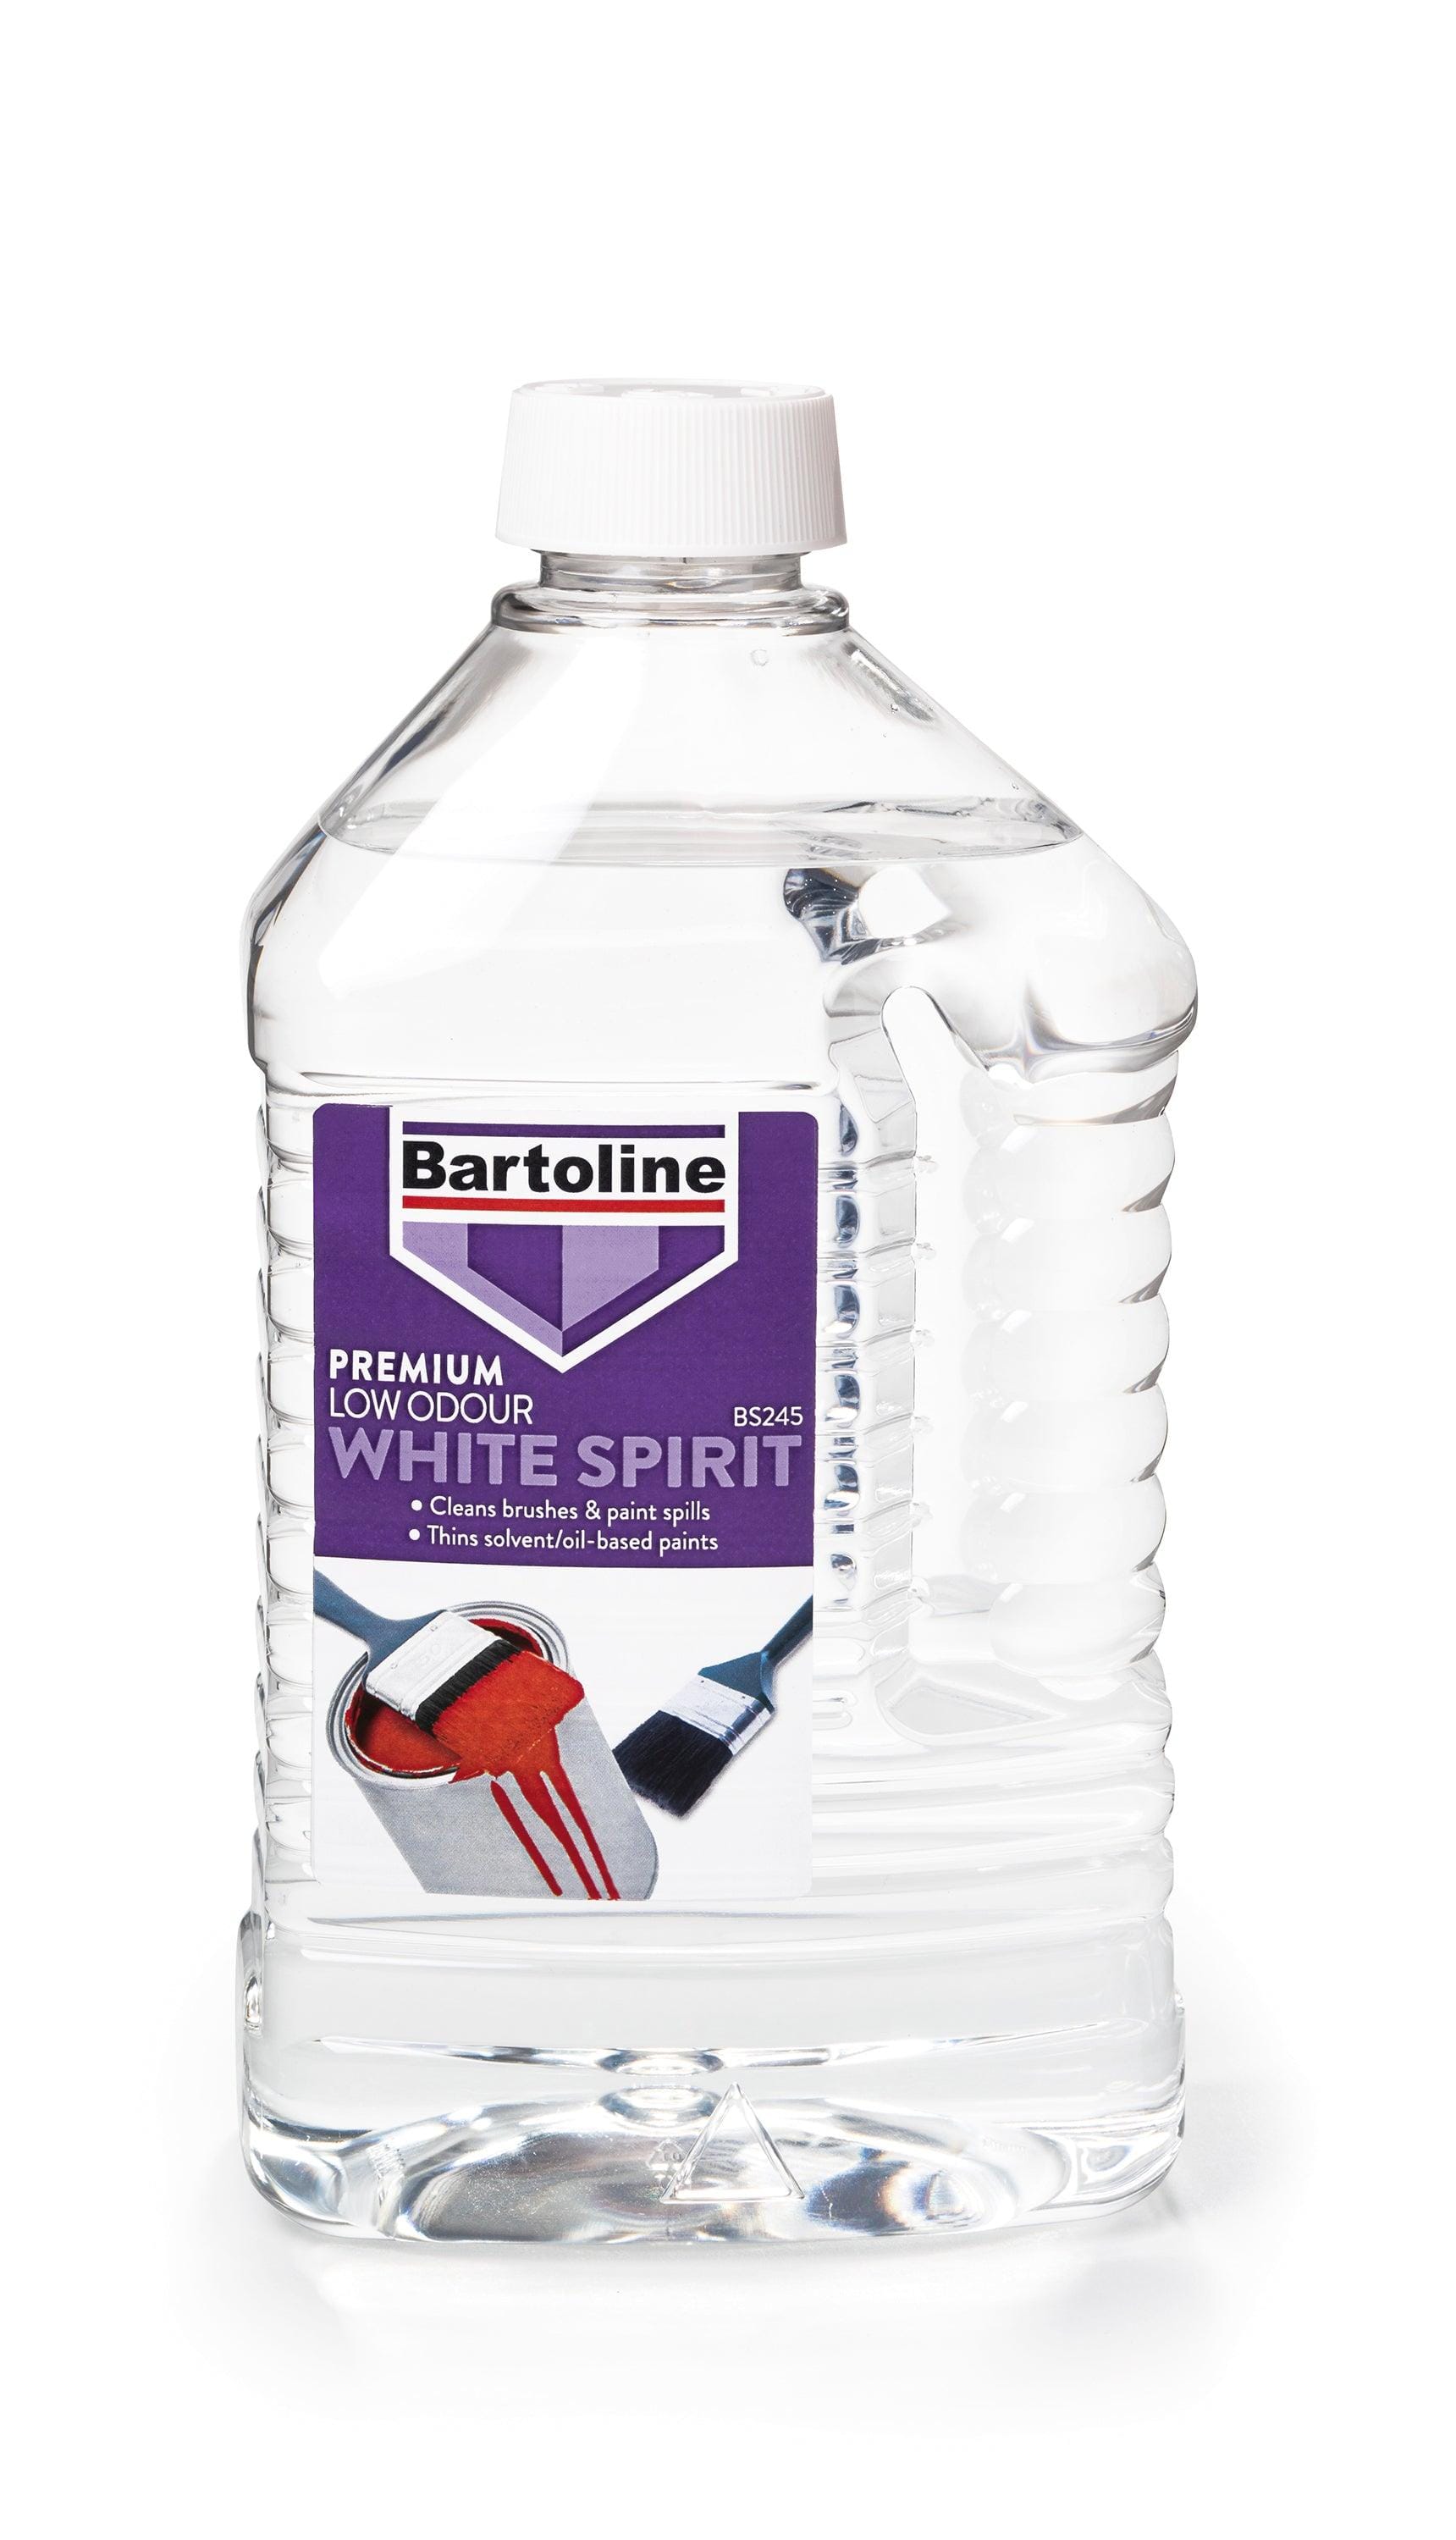 Bartoline 2 Litre Low Odour White Spirit - General Hardware Supplies Homevalue